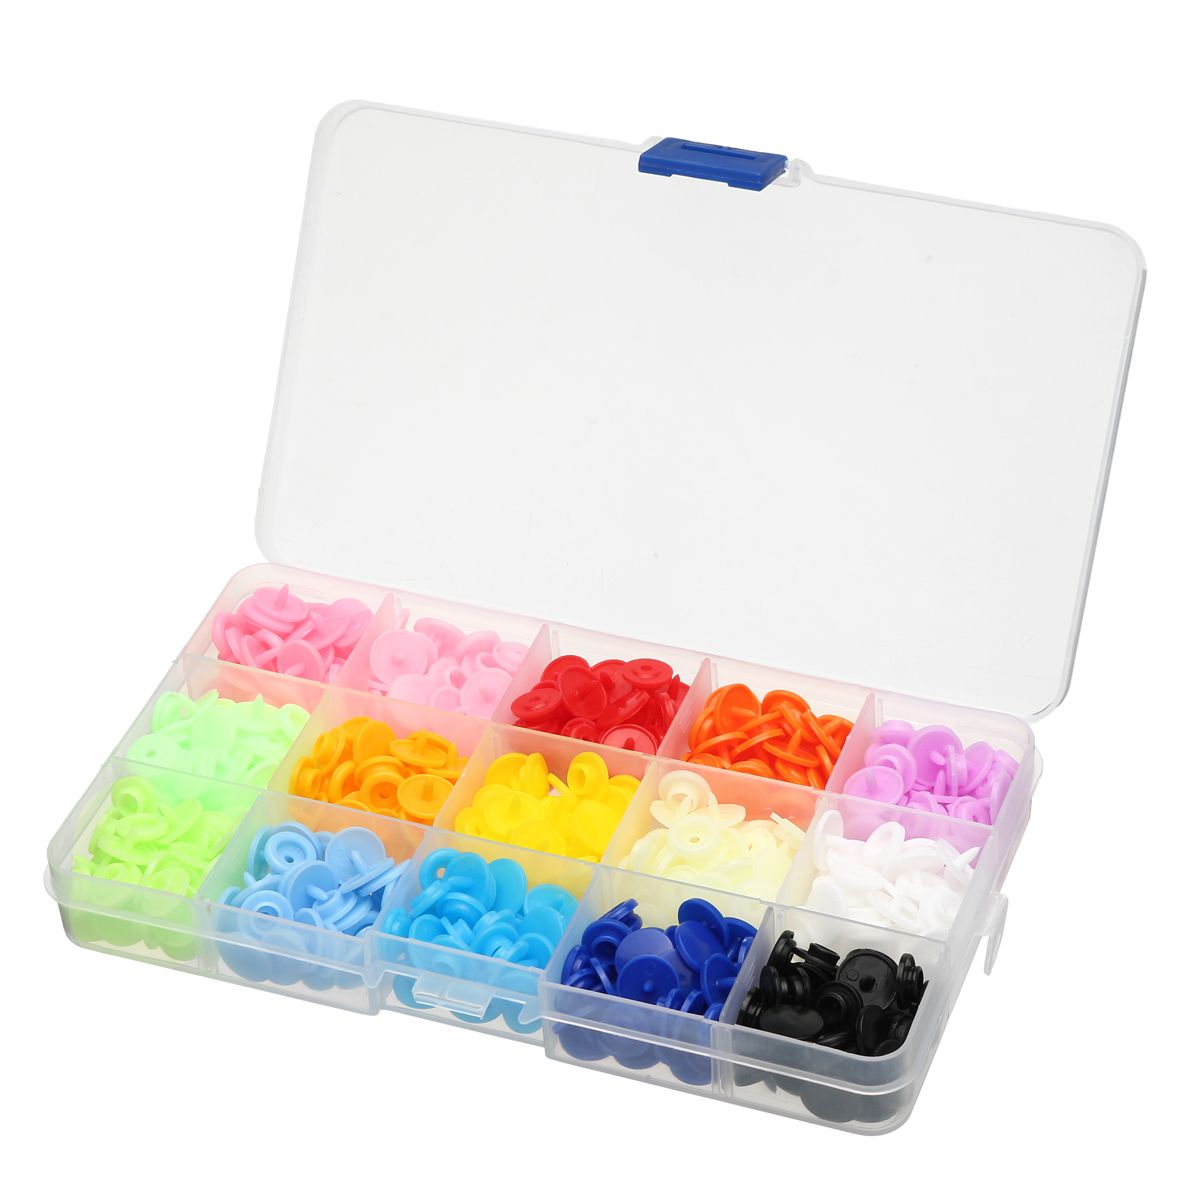 101524-Grids-Plastic-Jewelry-Box-Organizer-Storage-Container-Adjustable-Dividers-Storage-Case-1447832